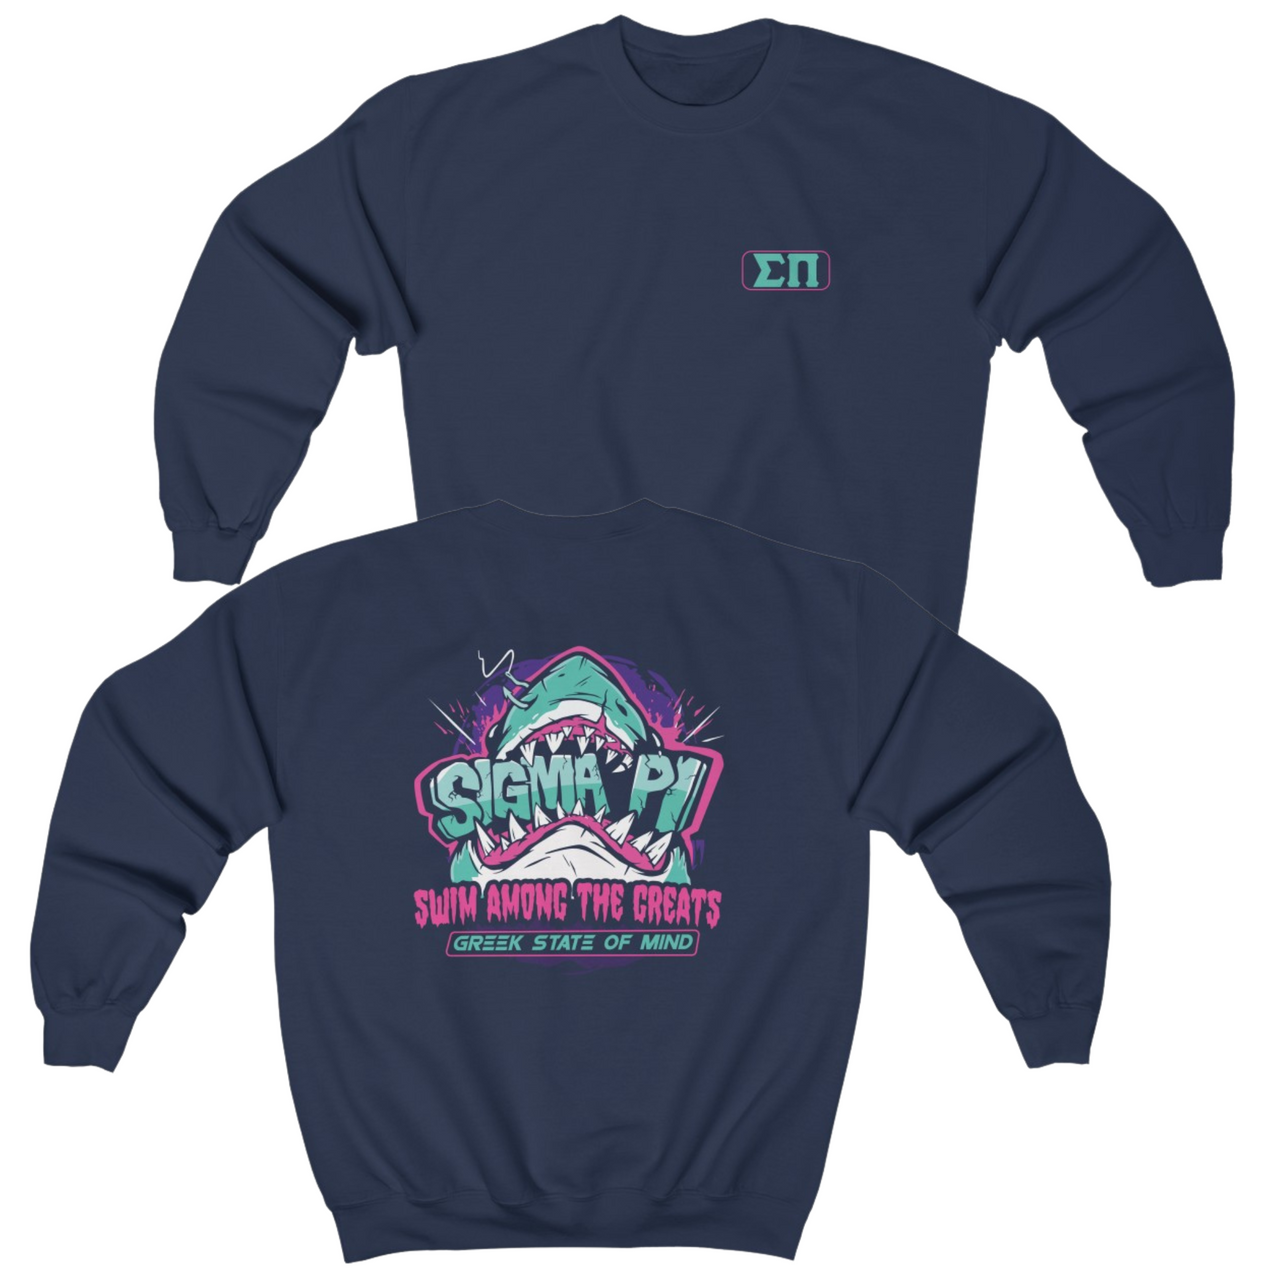 Navy Sigma Pi Graphic Crewneck Sweatshirt | The Deep End | Sigma Pi Apparel and Merchandise